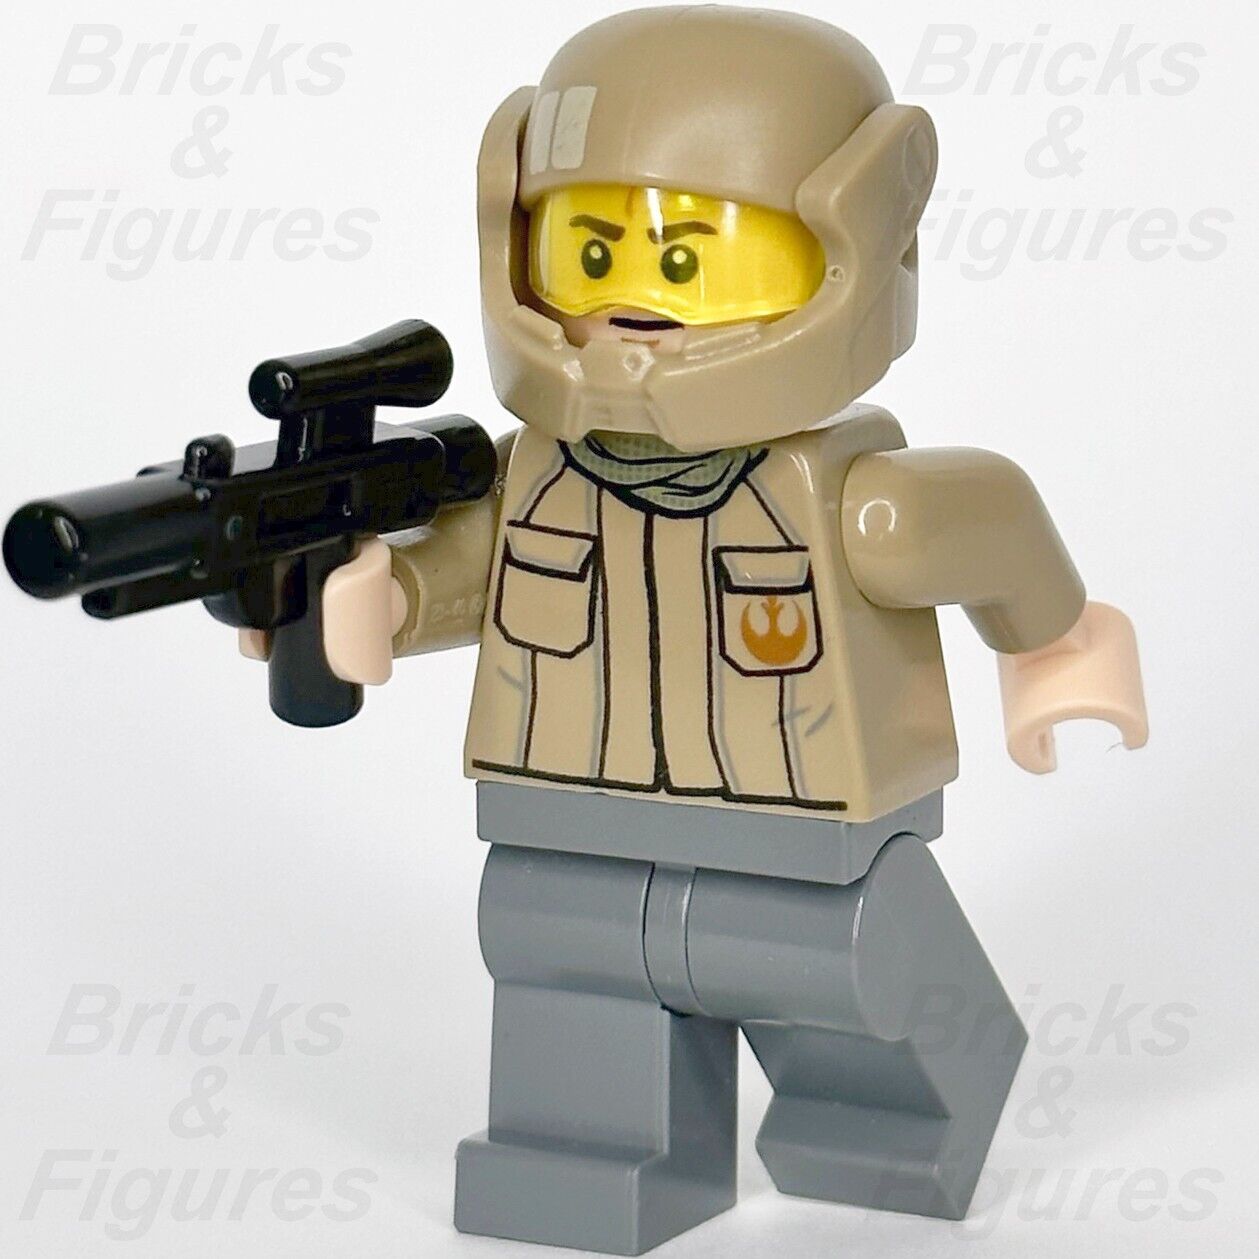 LEGO Star Wars Resistance Trooper Minifigure The Force Awakens 75140 sw0721 New - Bricks & Figures